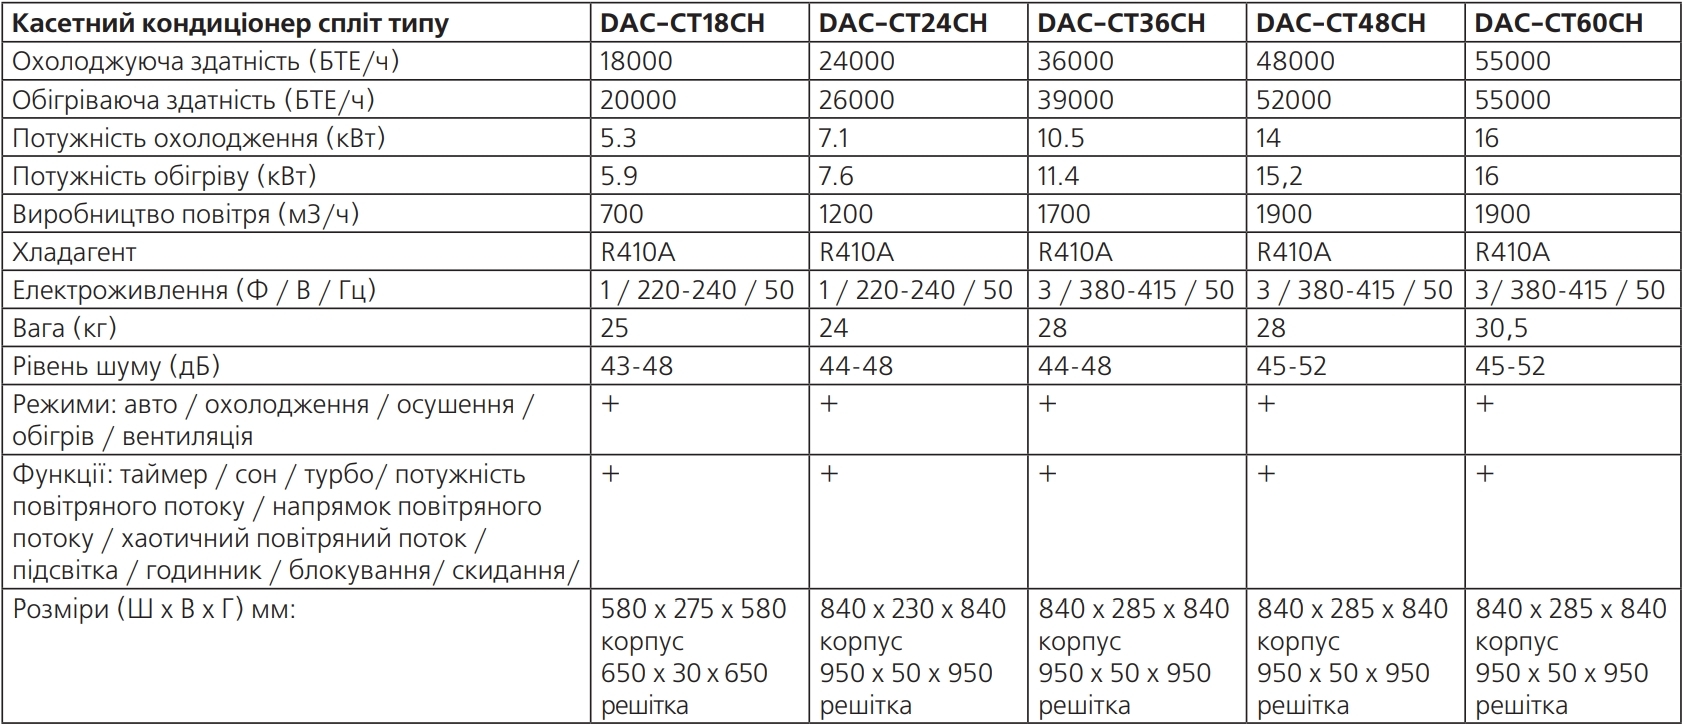 Digital DAC-CT24CH Характеристики